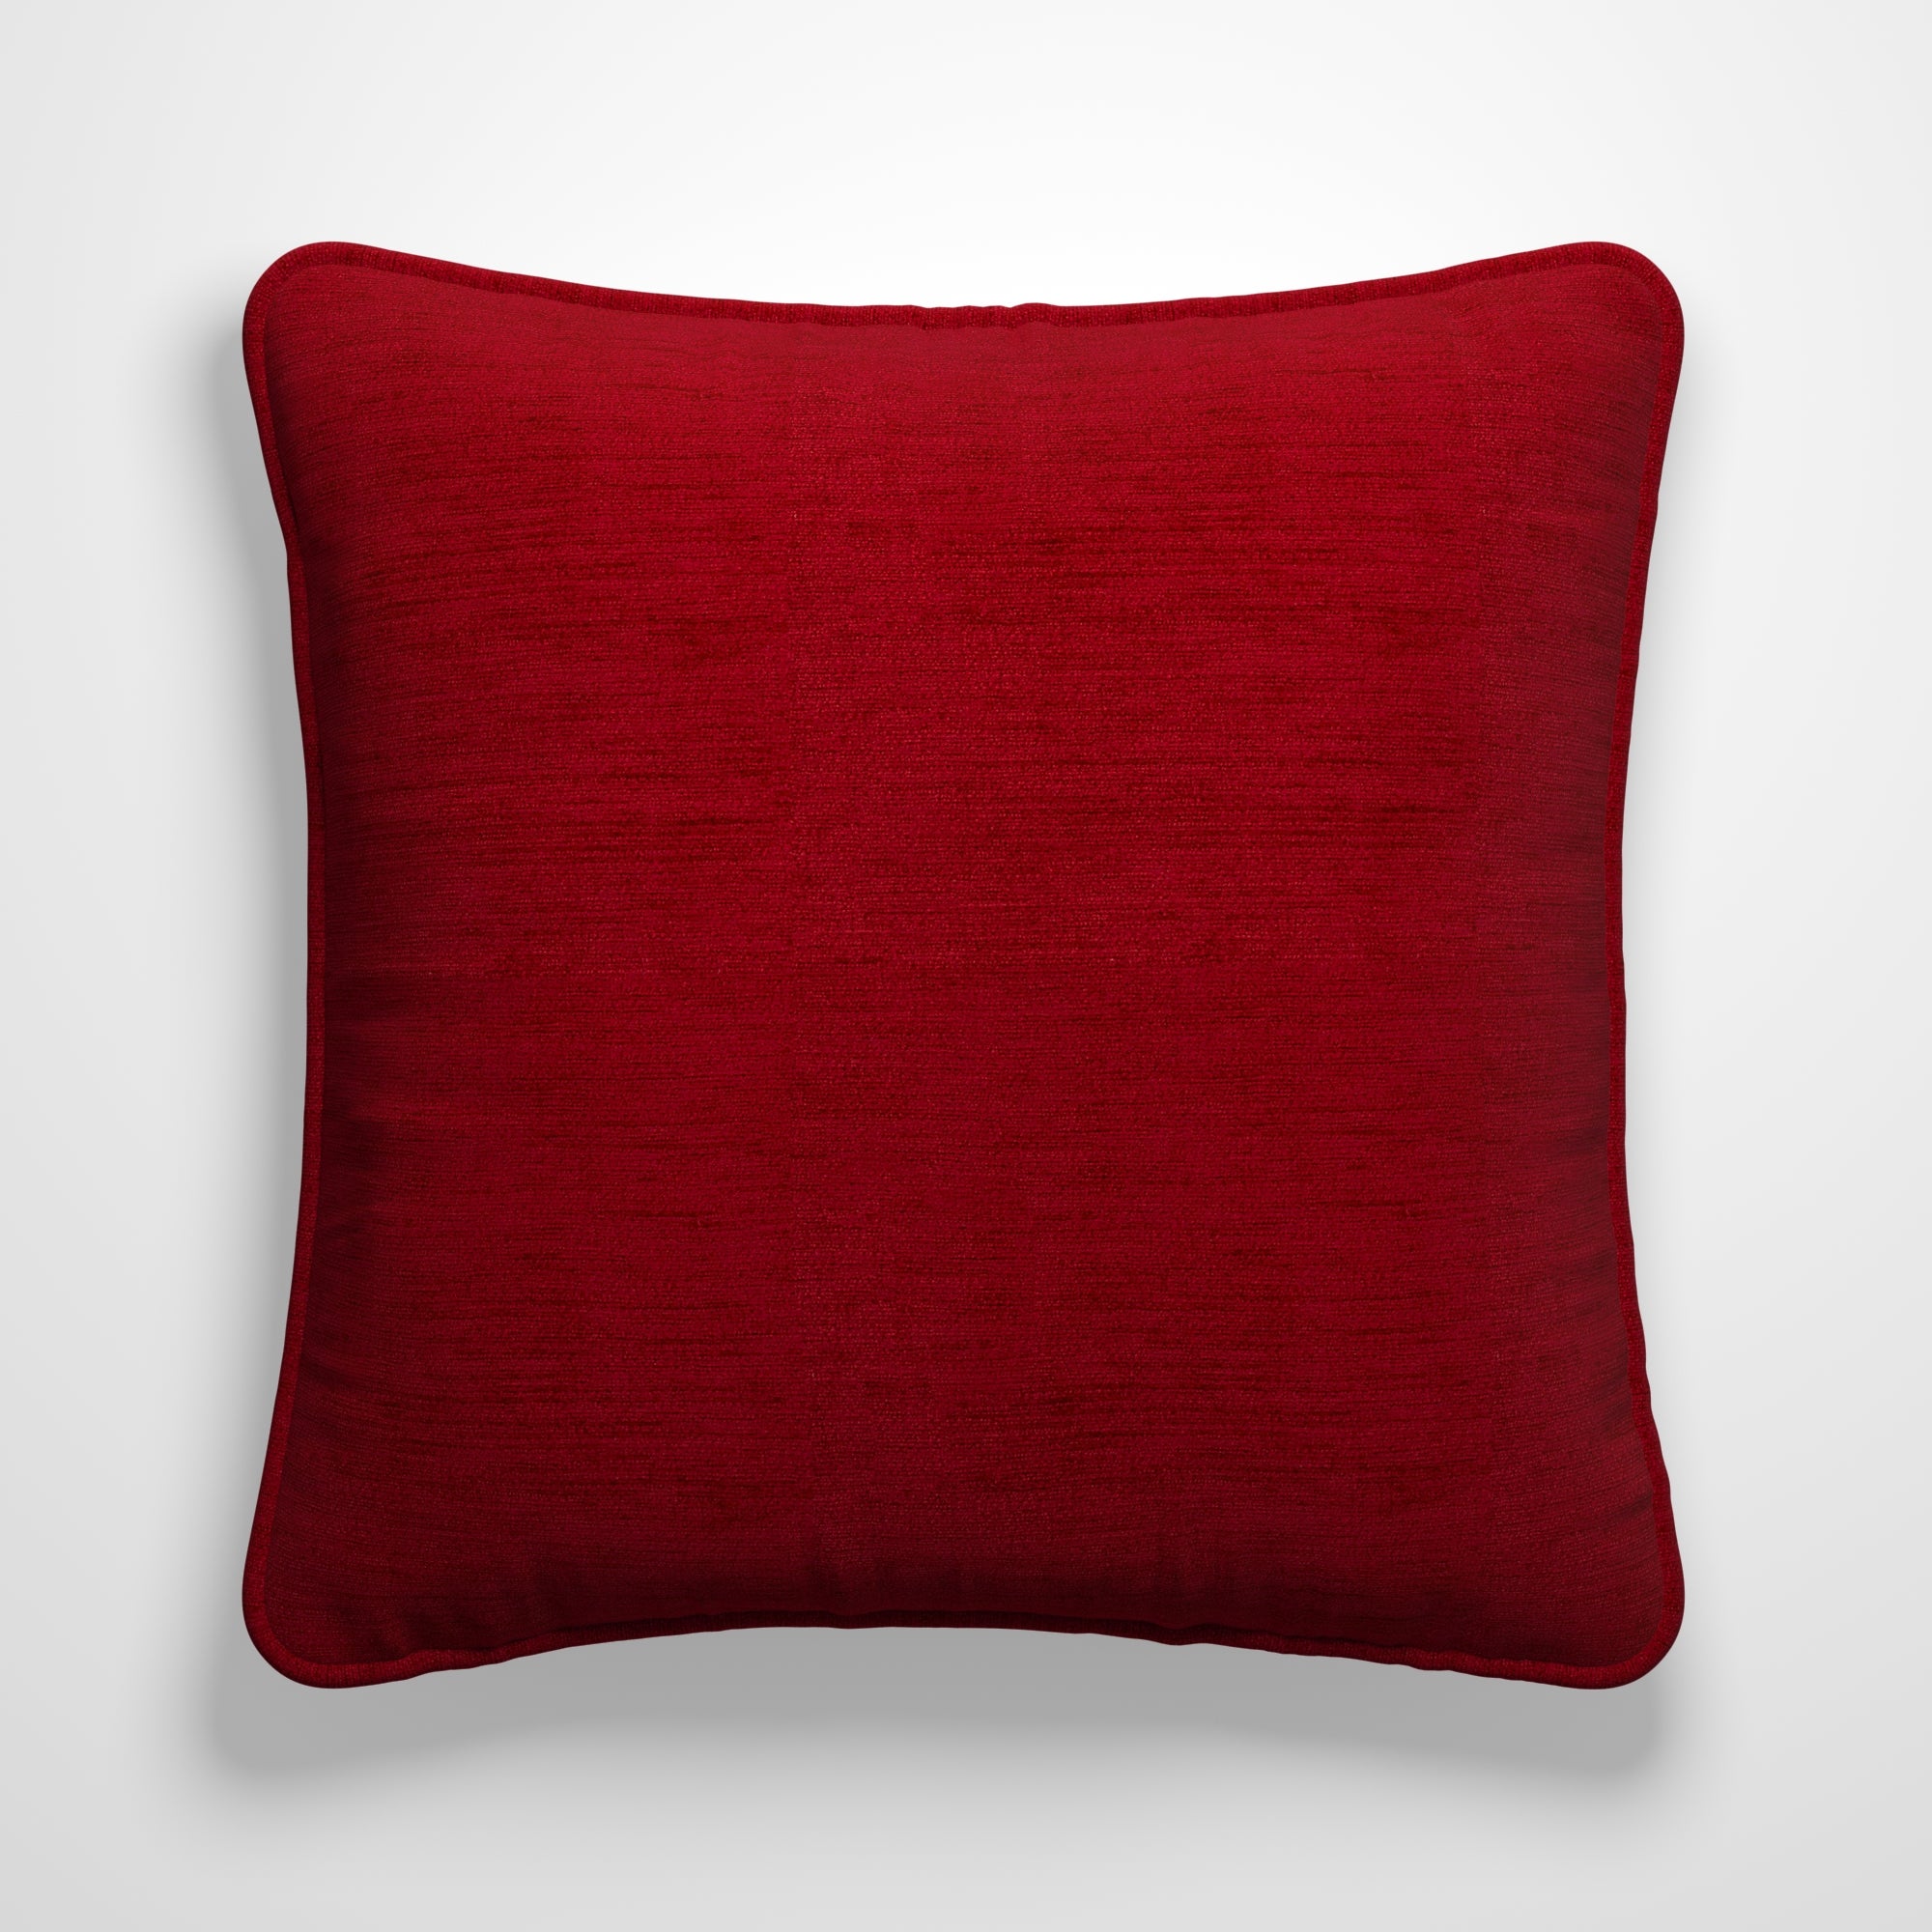 Kensington Made to Order Cushion Cover Kensington Red